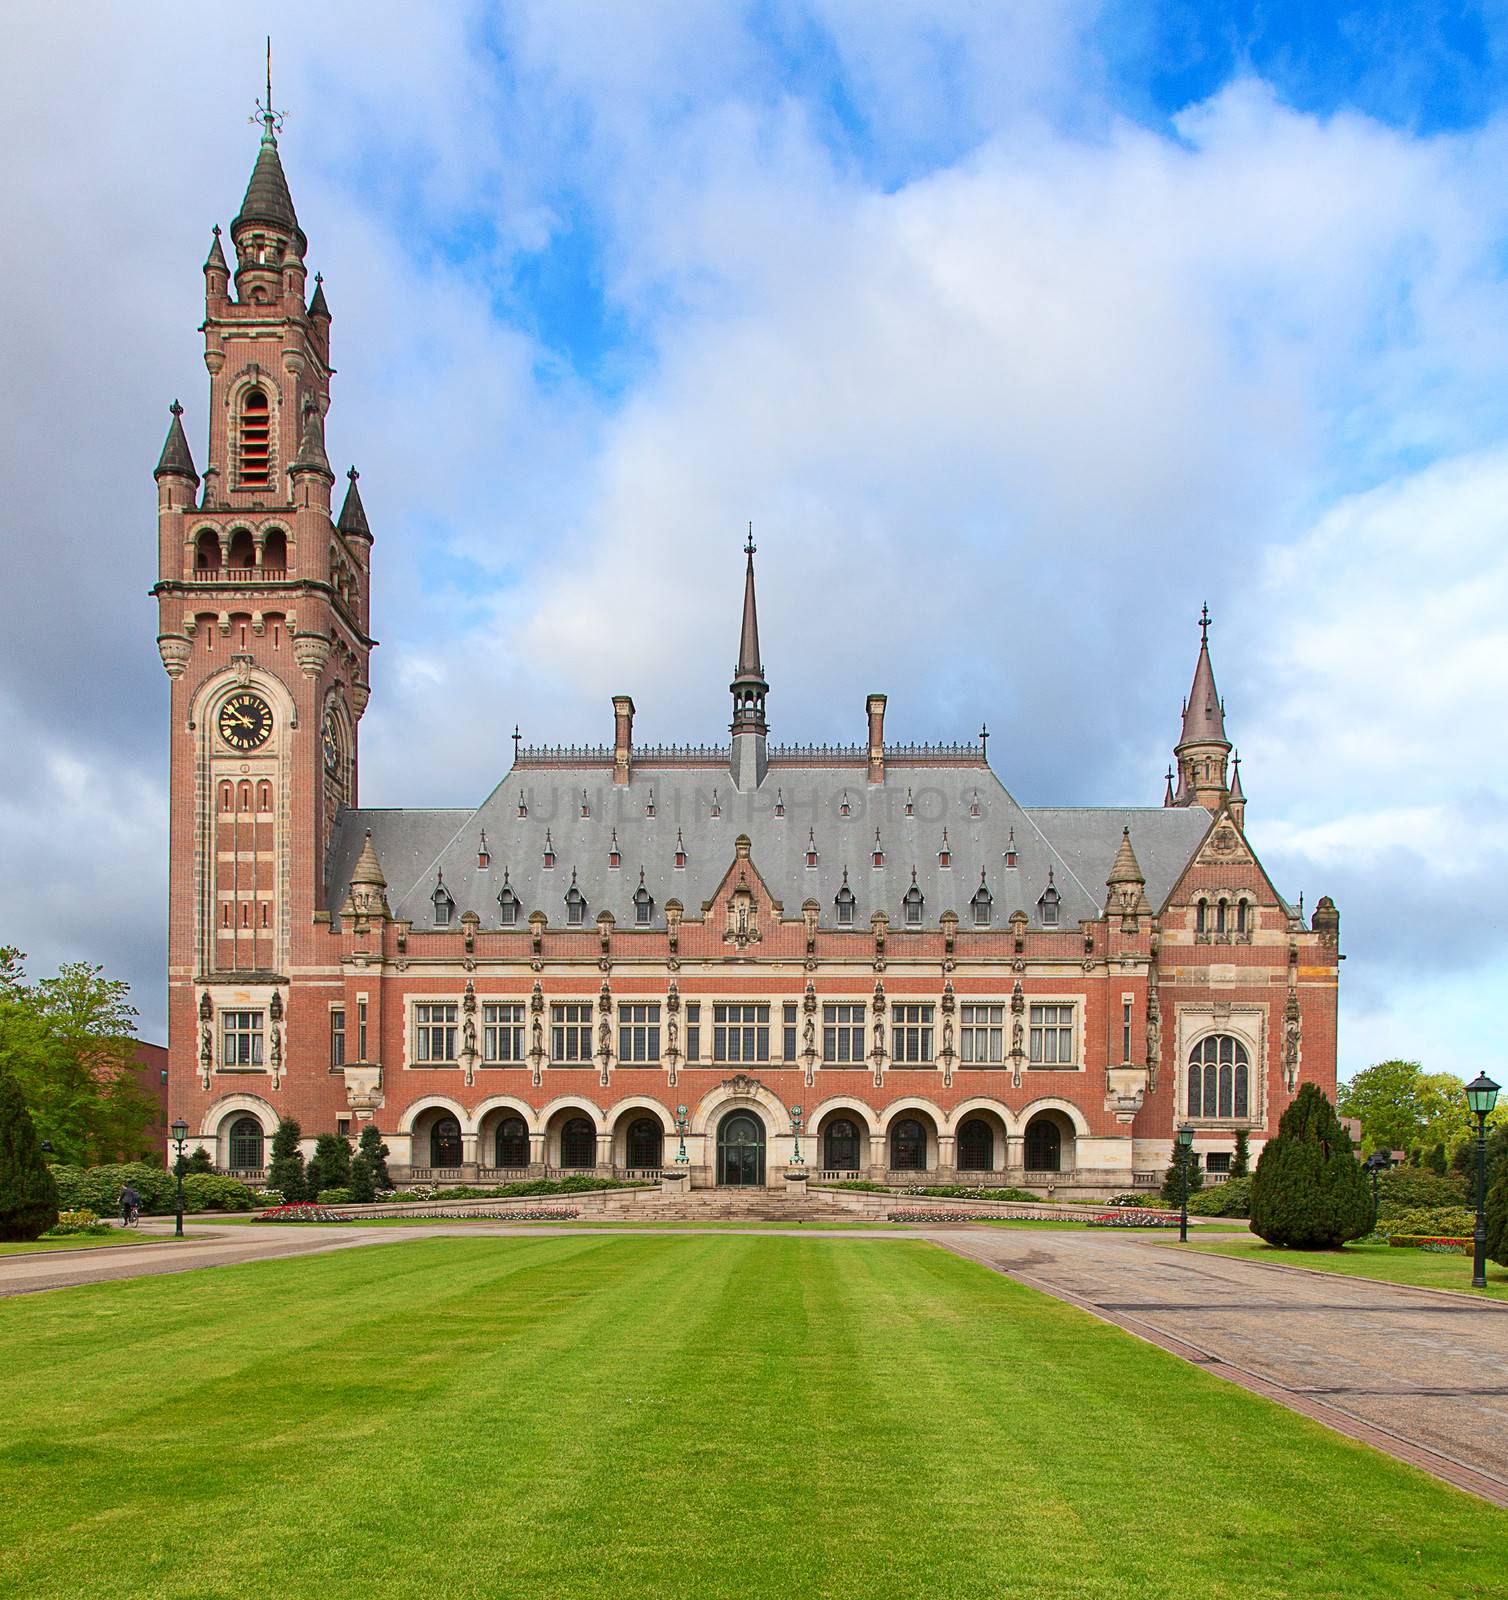 International court of justice in Hague, Netherlands